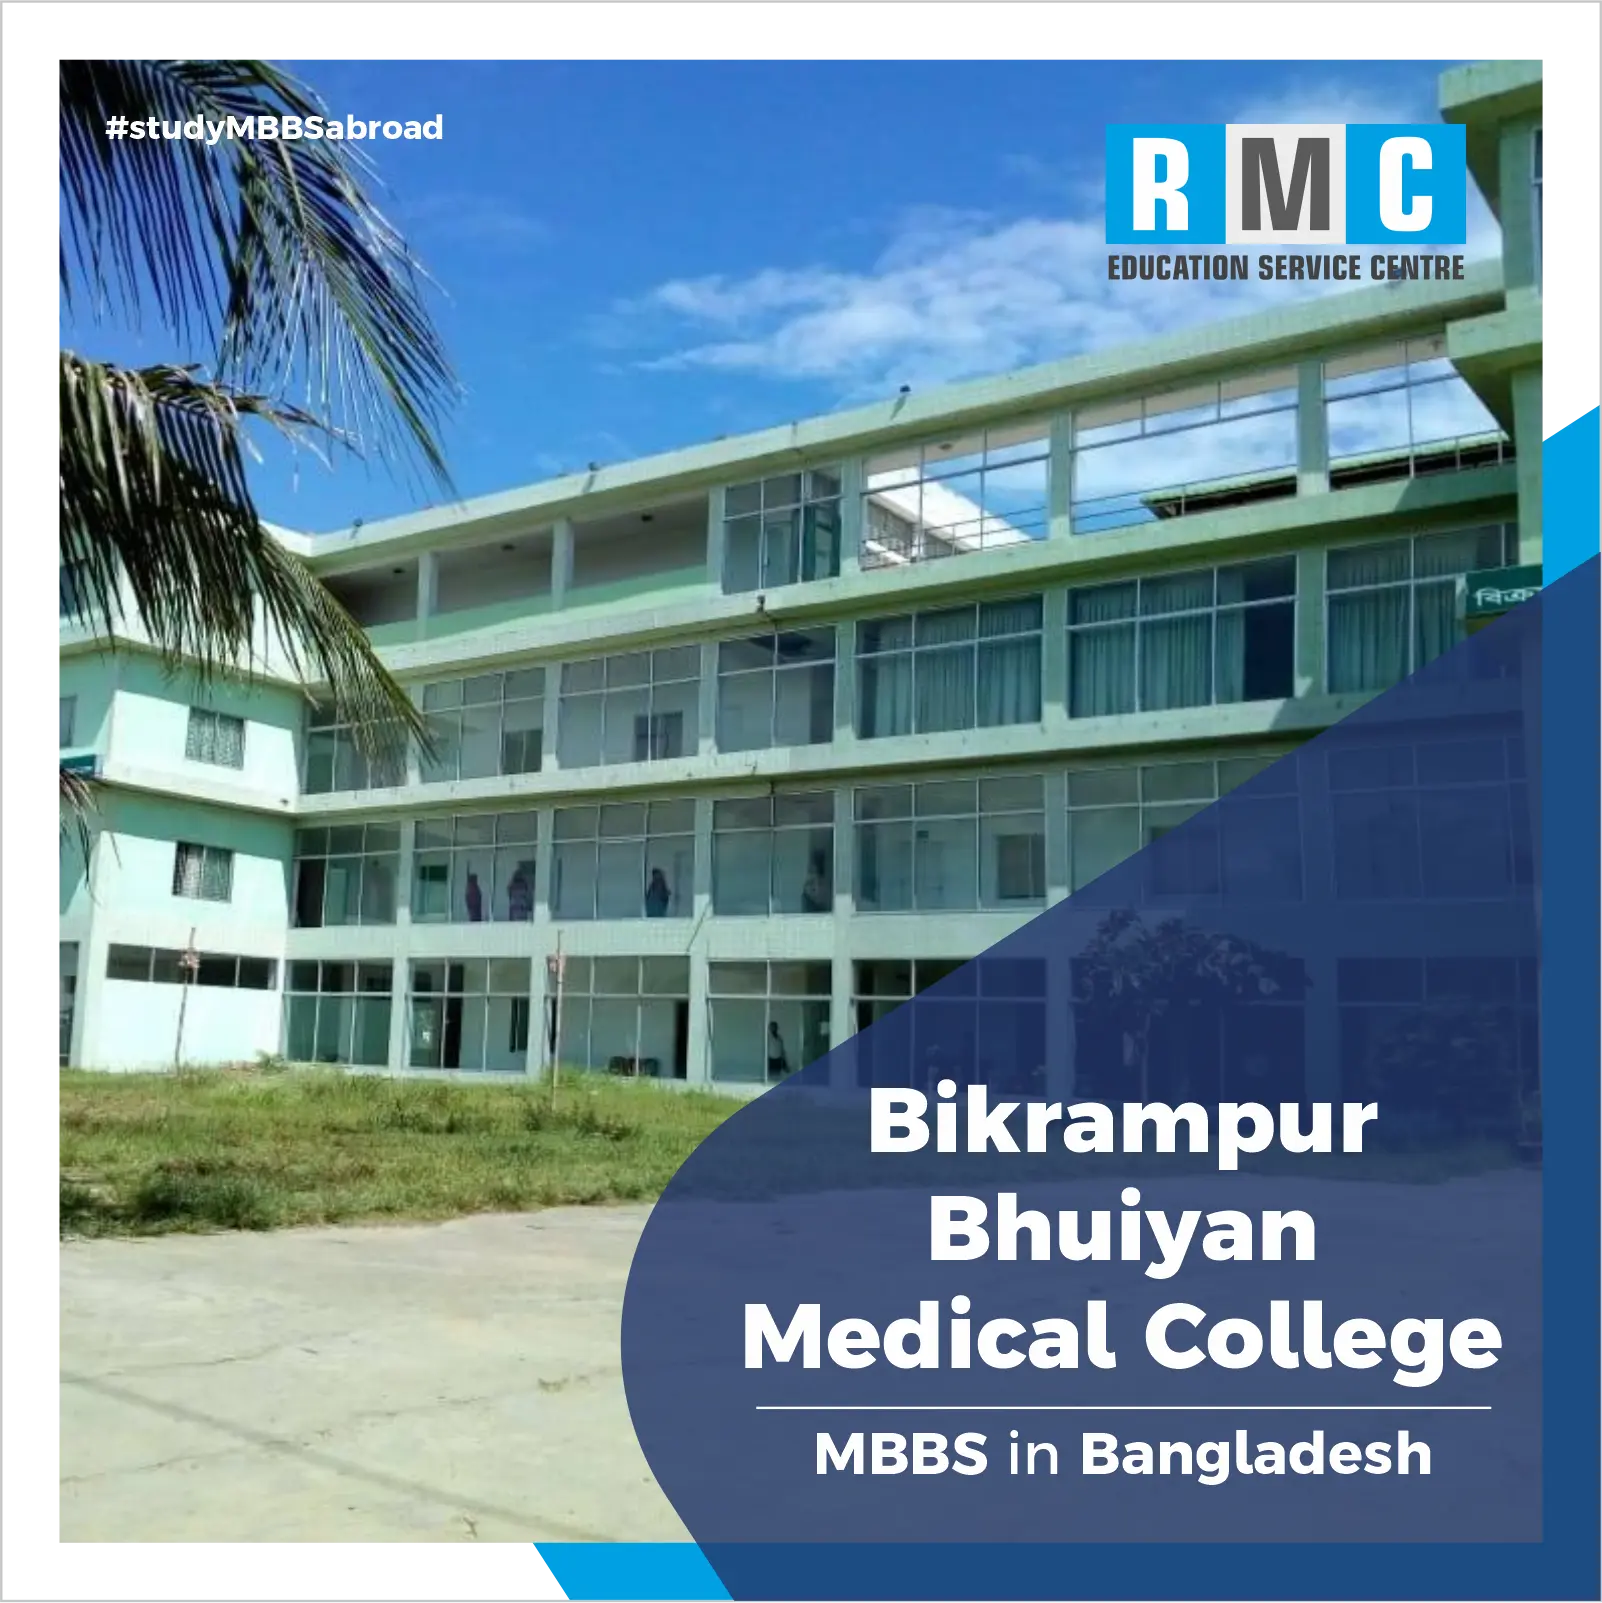 Bikrampur Bhuiyan medical college and Hospital